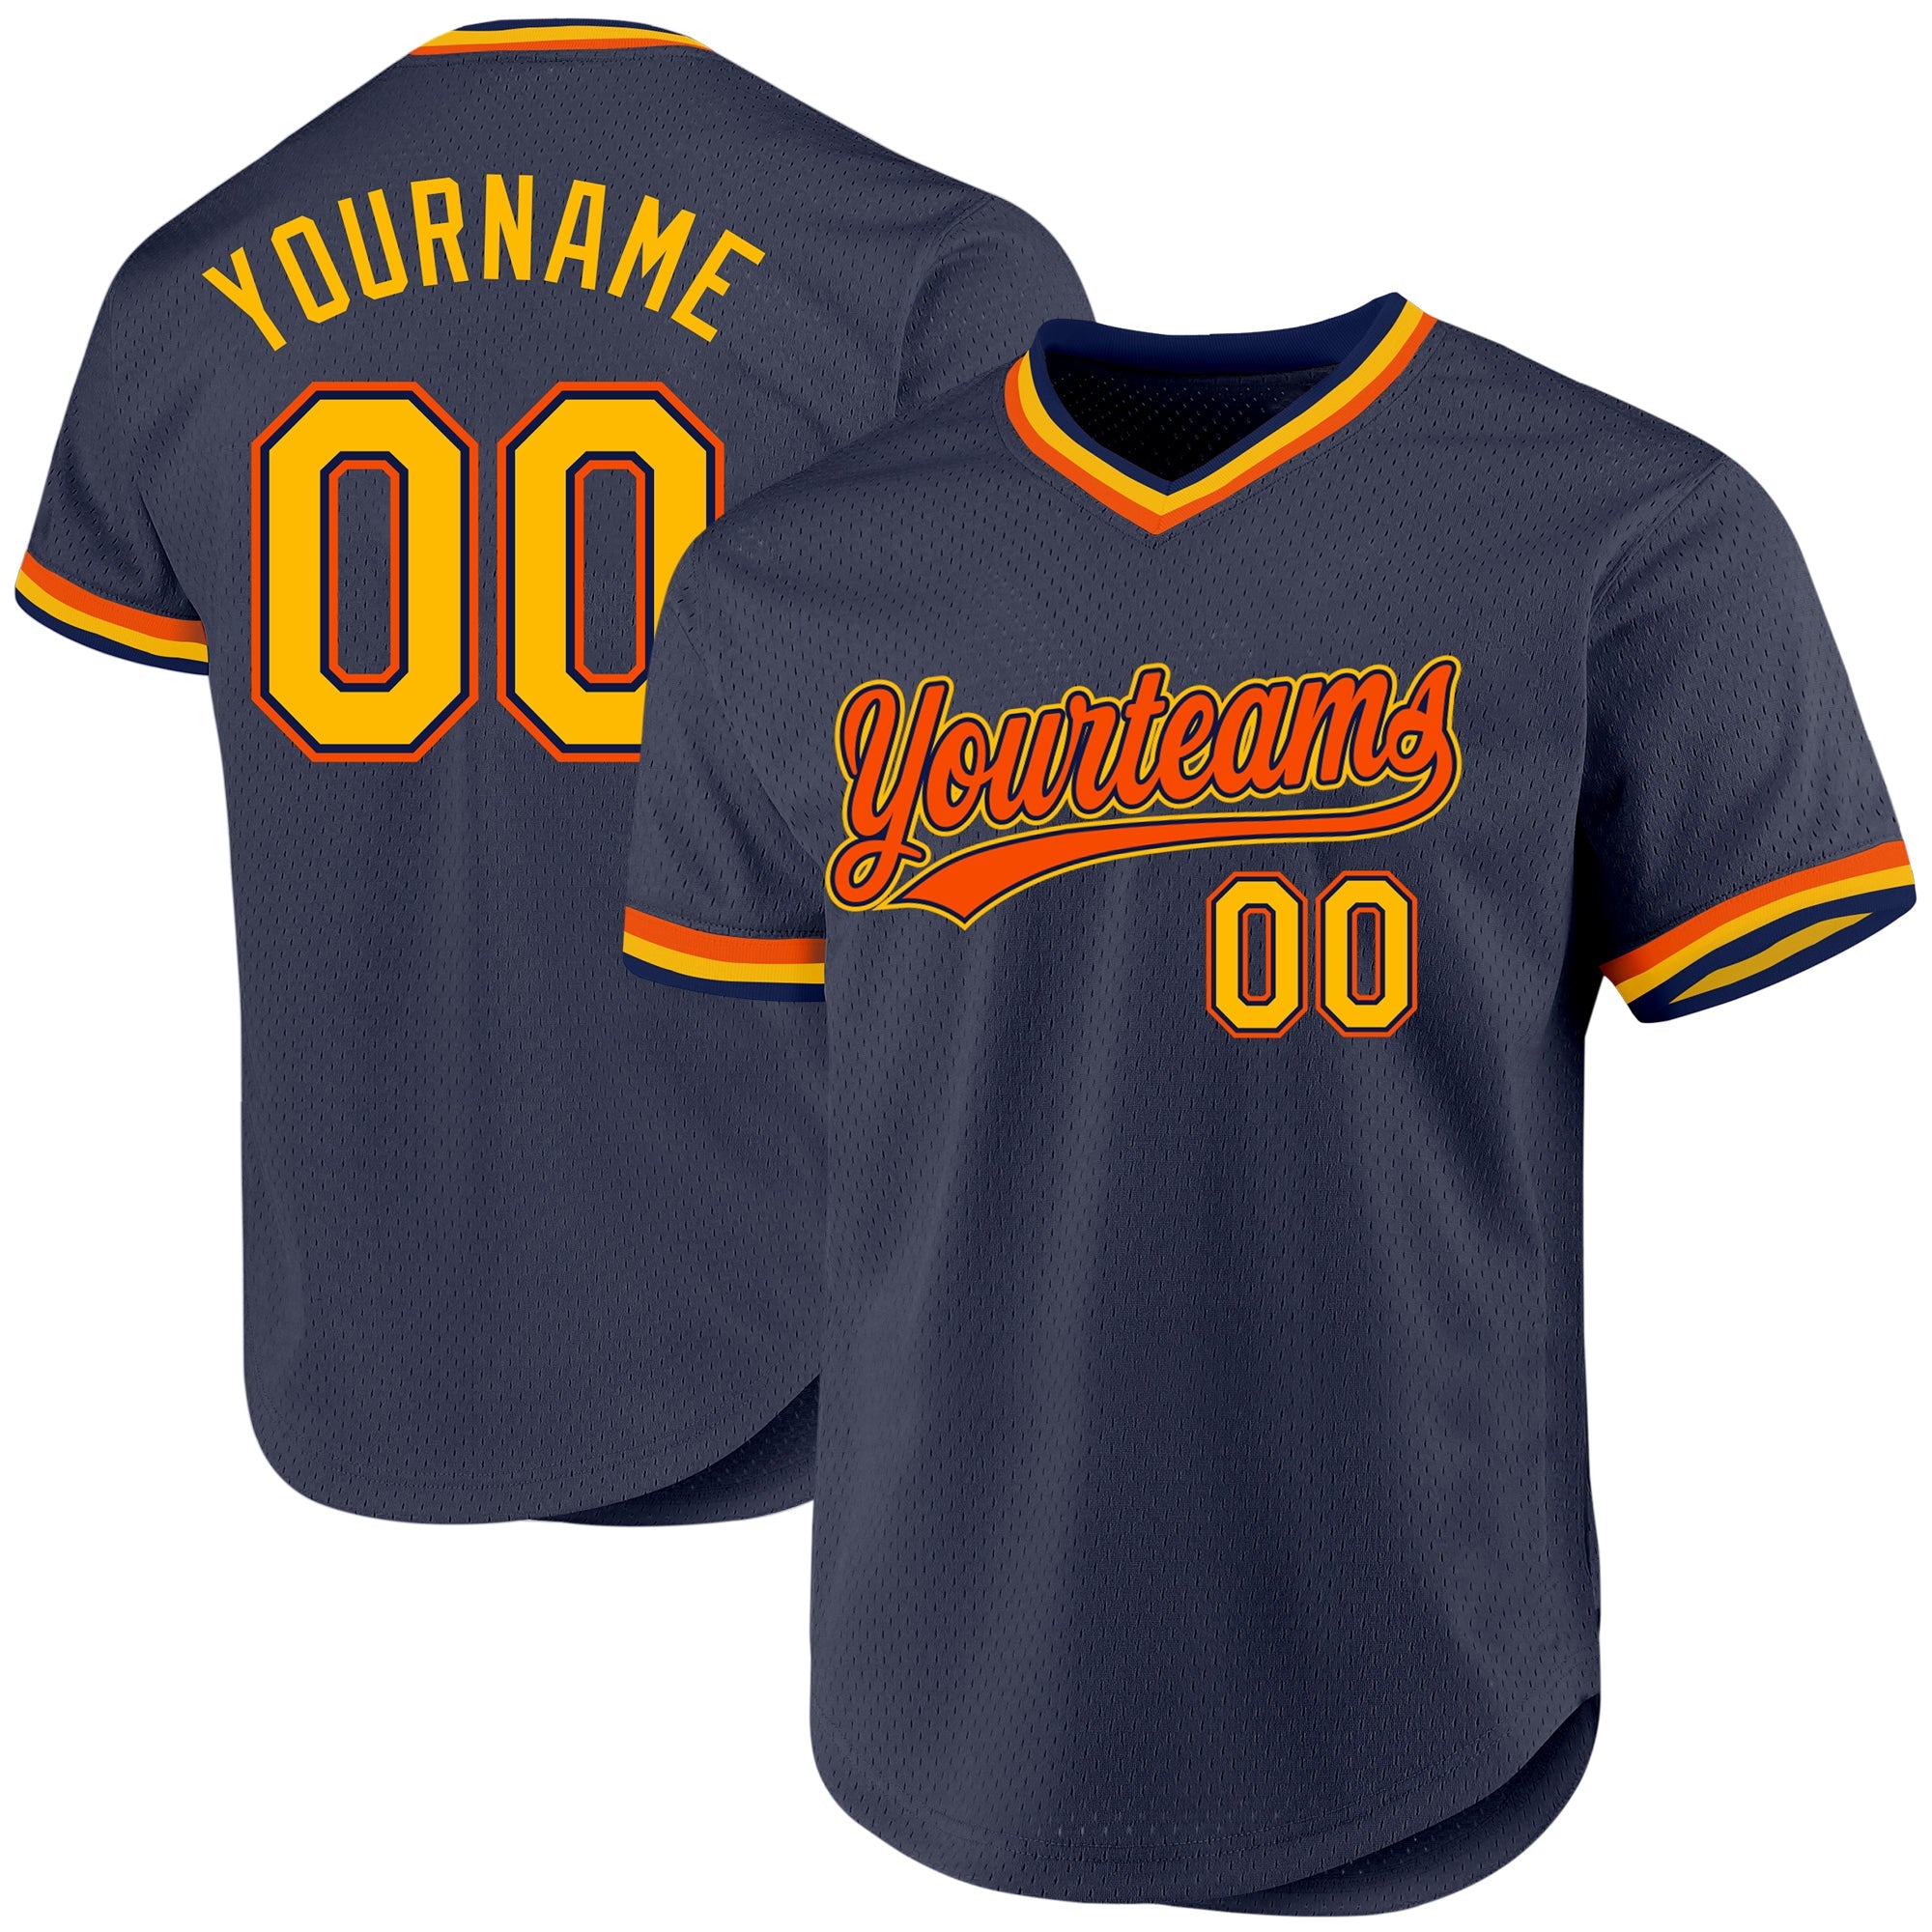 Marine personnalisé or-Orange authentique Throwback maillots de baseball